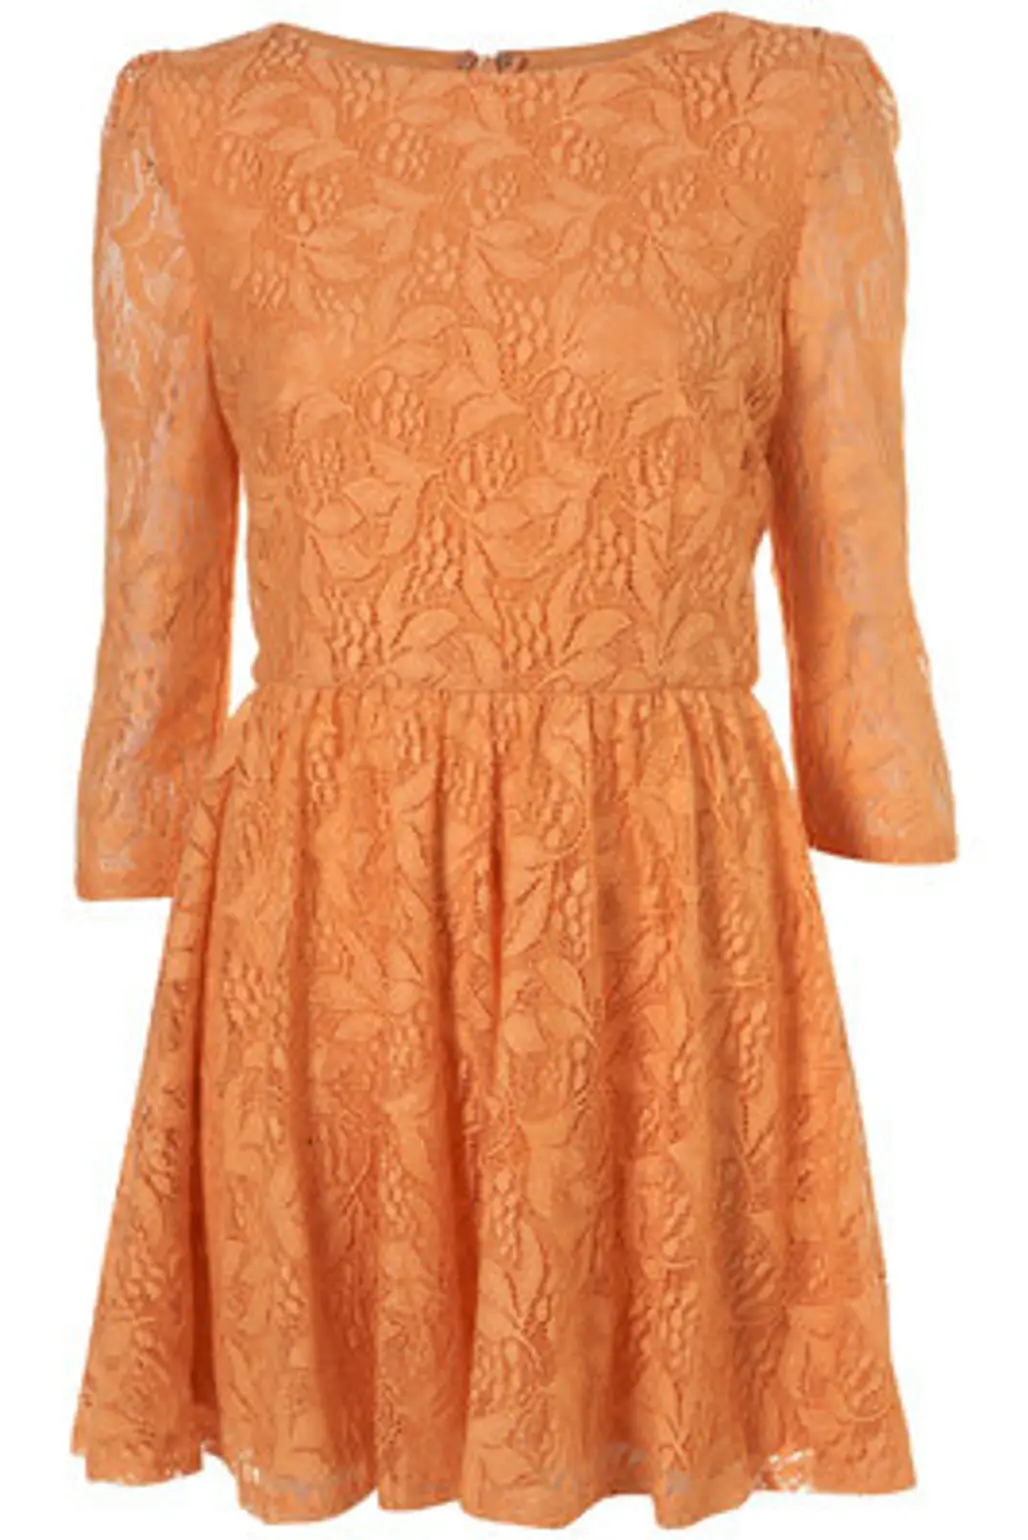 Topshop Orange Lace Flippy Dress